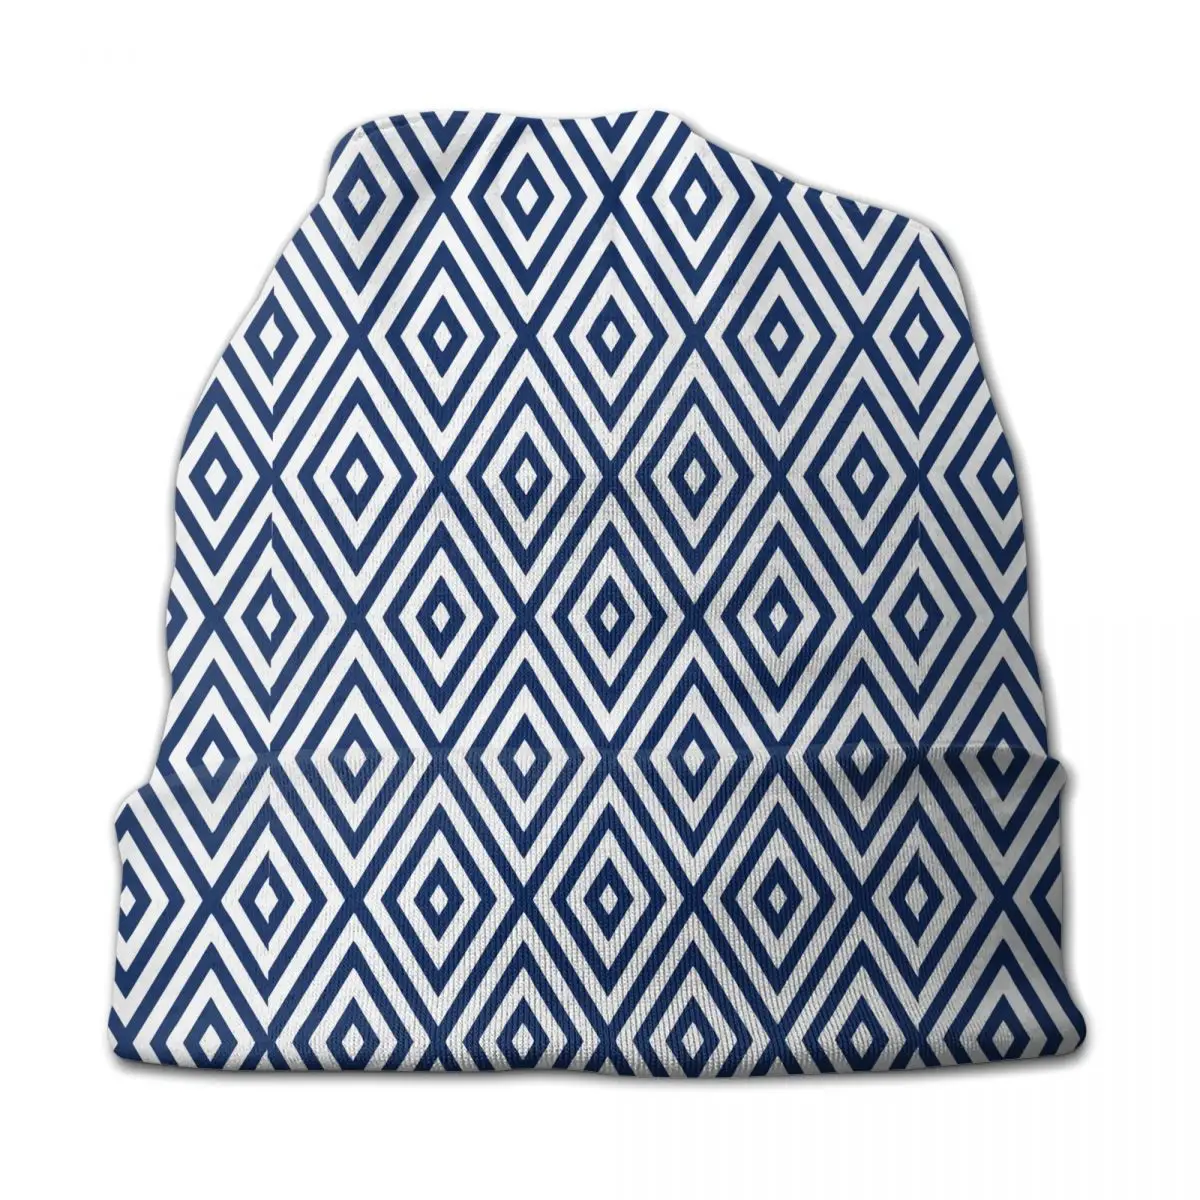 

Шапка-бини с геометрическим рисунком, трикотажная шапка цвета индиго, темно-синего цвета, в стиле бохо, в морском стиле, двухцелевая, весна